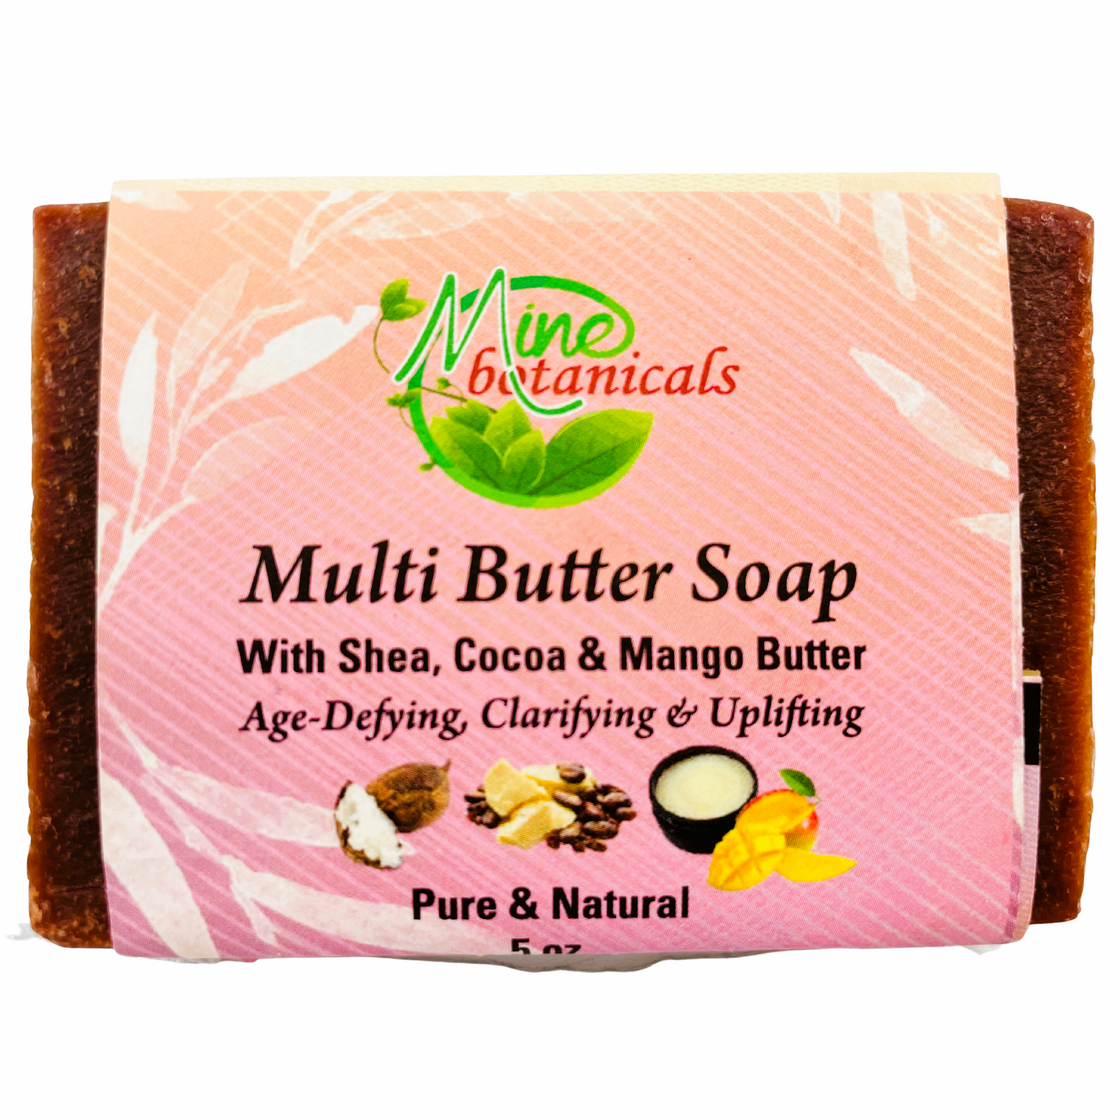 Multi Butter Soap